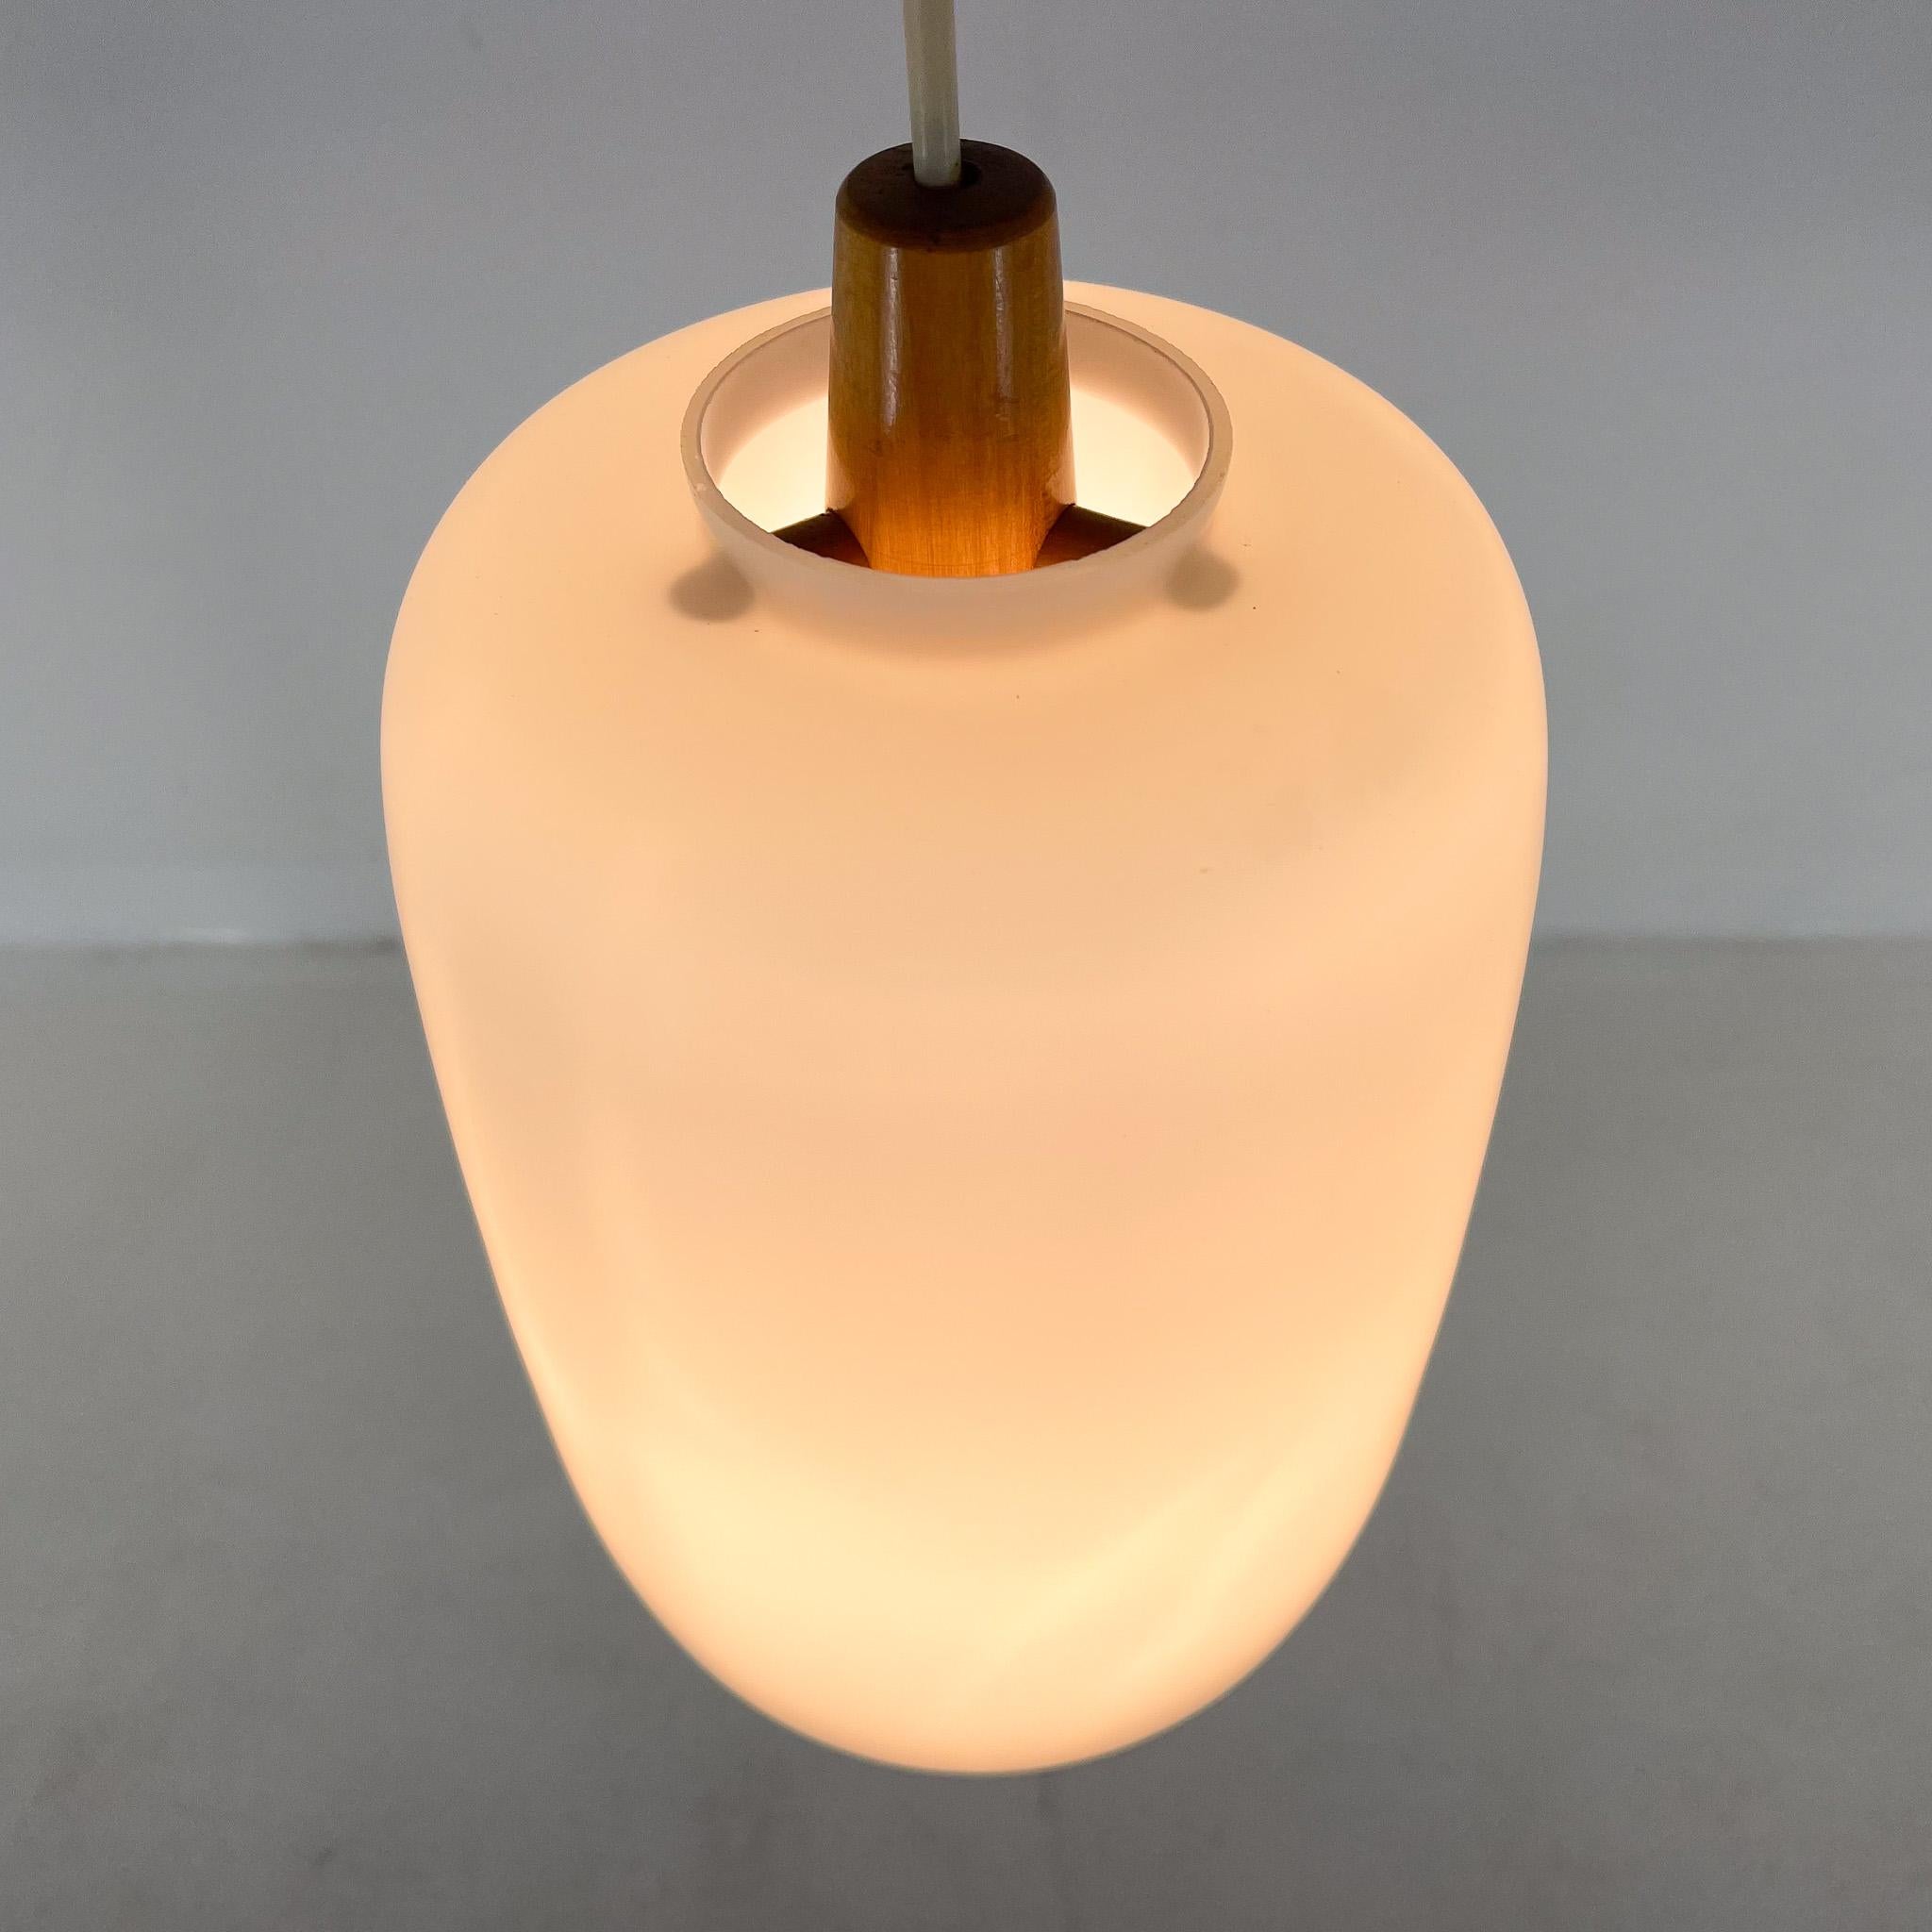 20th Century 1960s Wood and Glass Midcentury Pendant Light by ULUV, Czechoslovakia